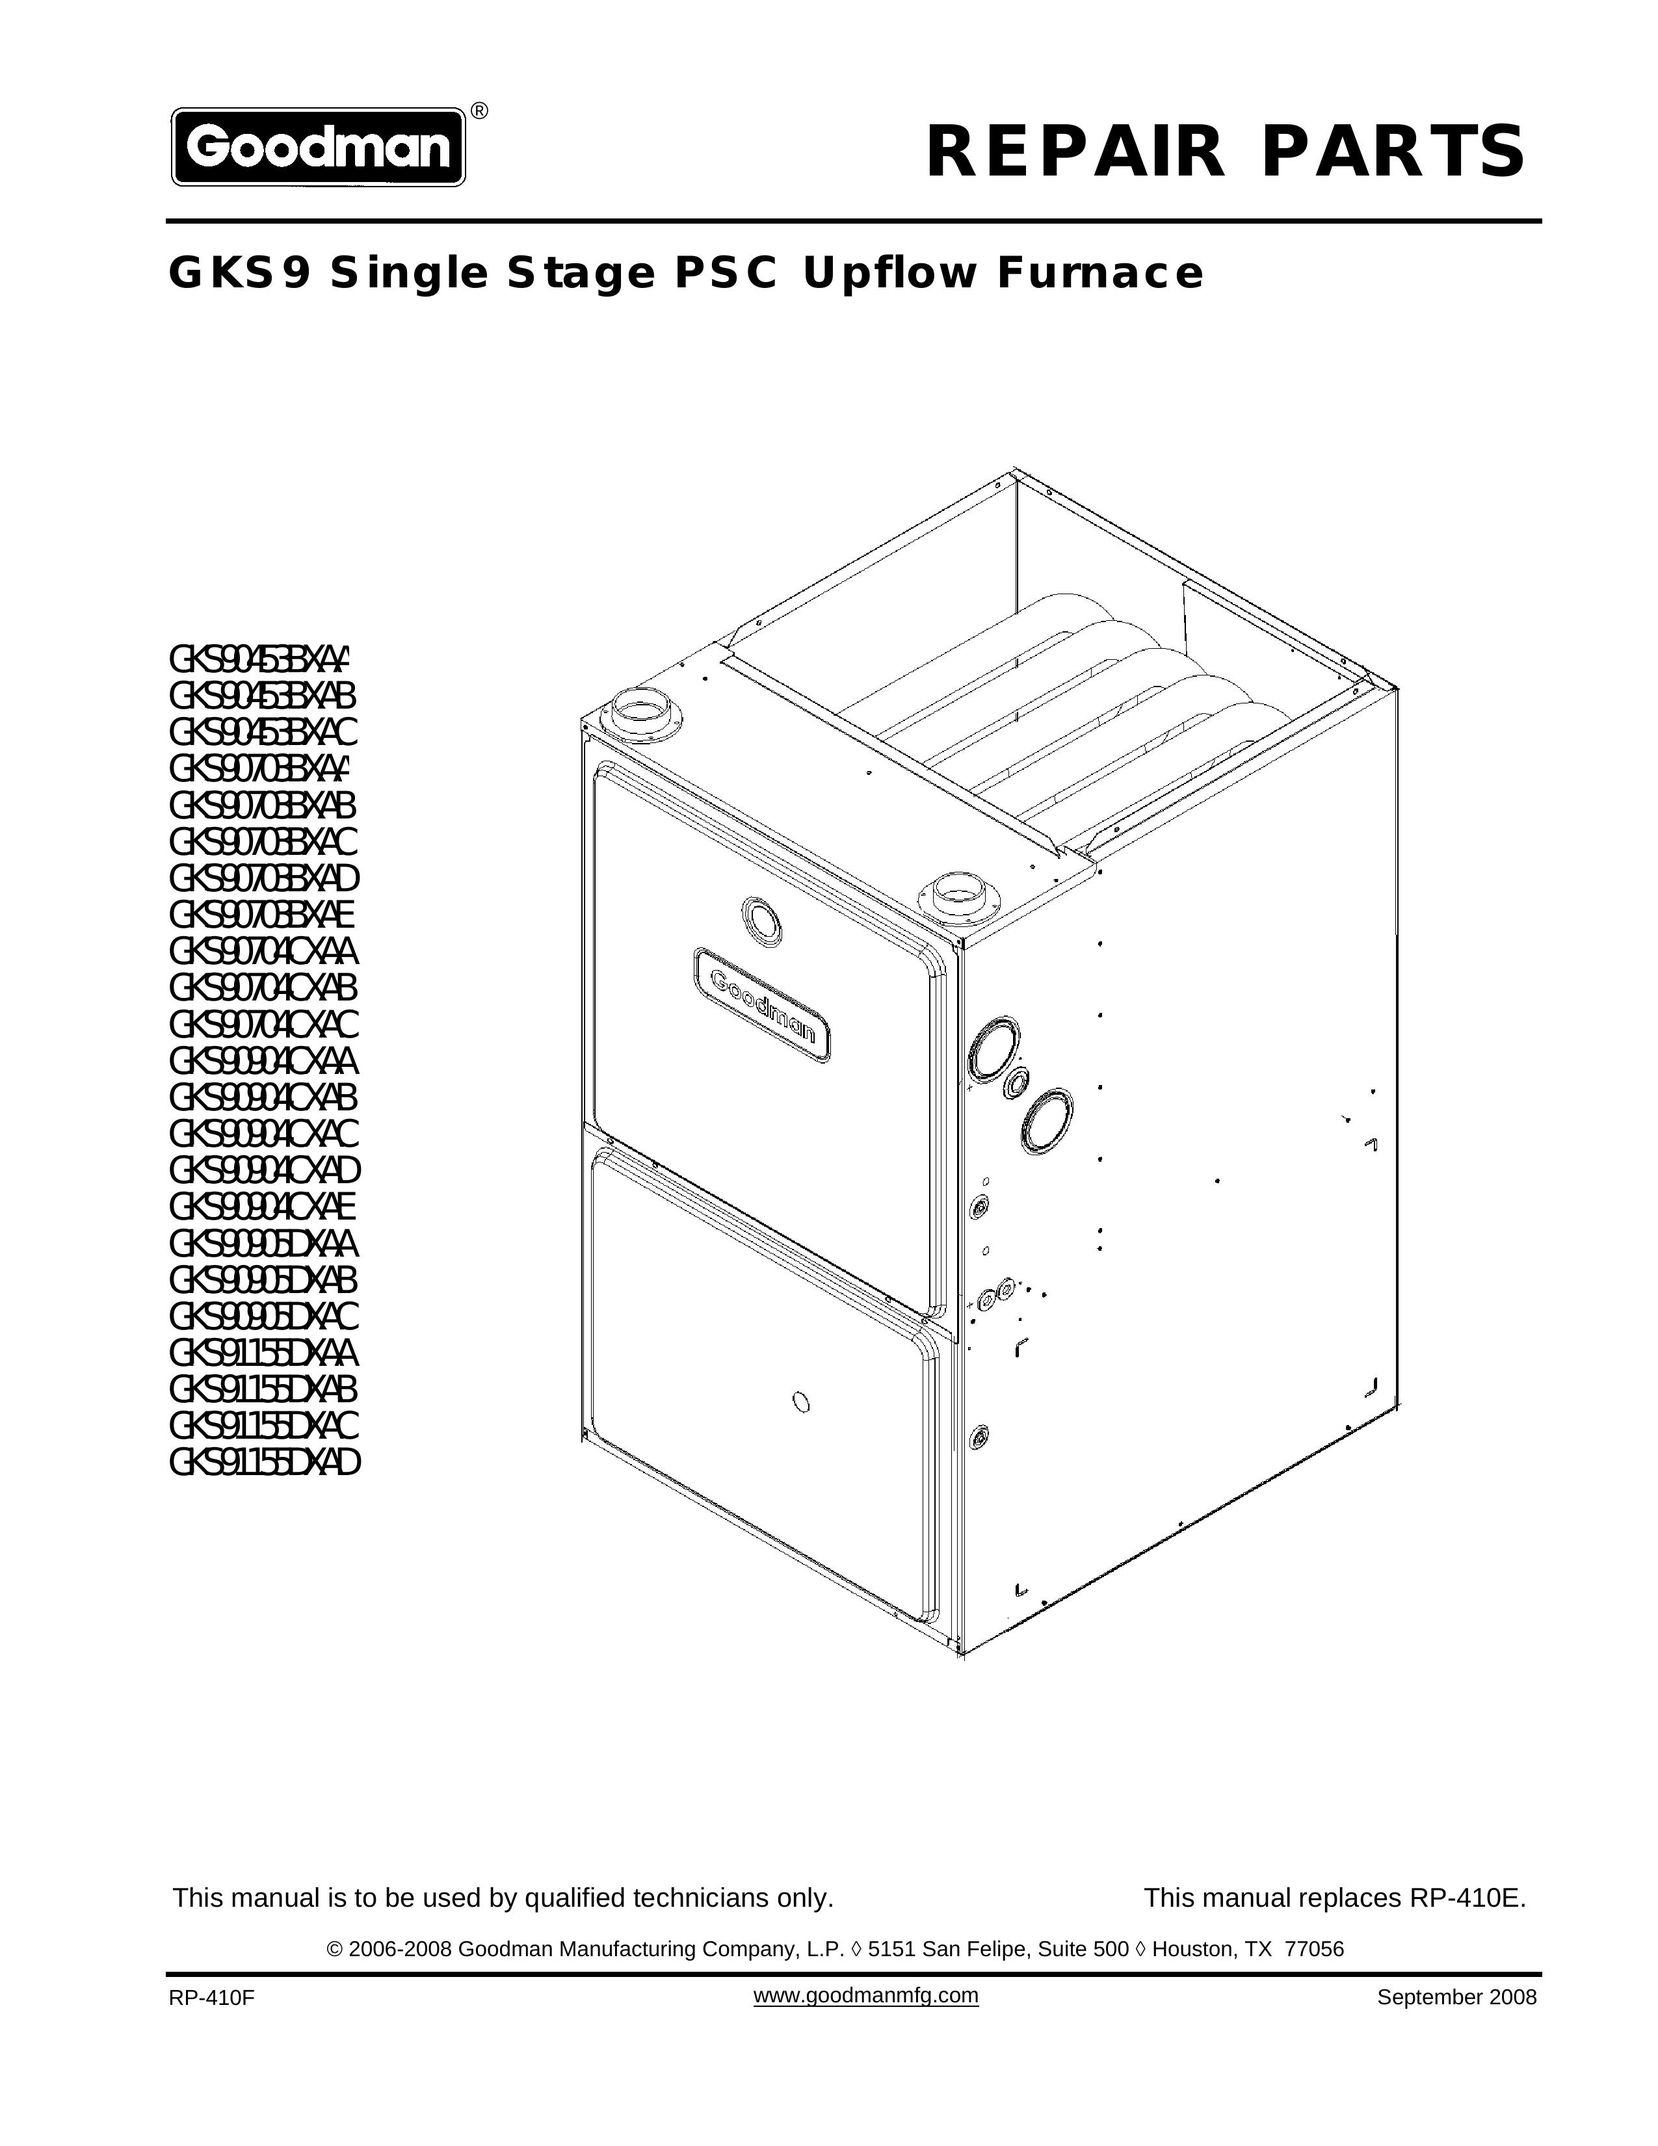 Goodman Mfg GKS90703BXAA Furnace User Manual